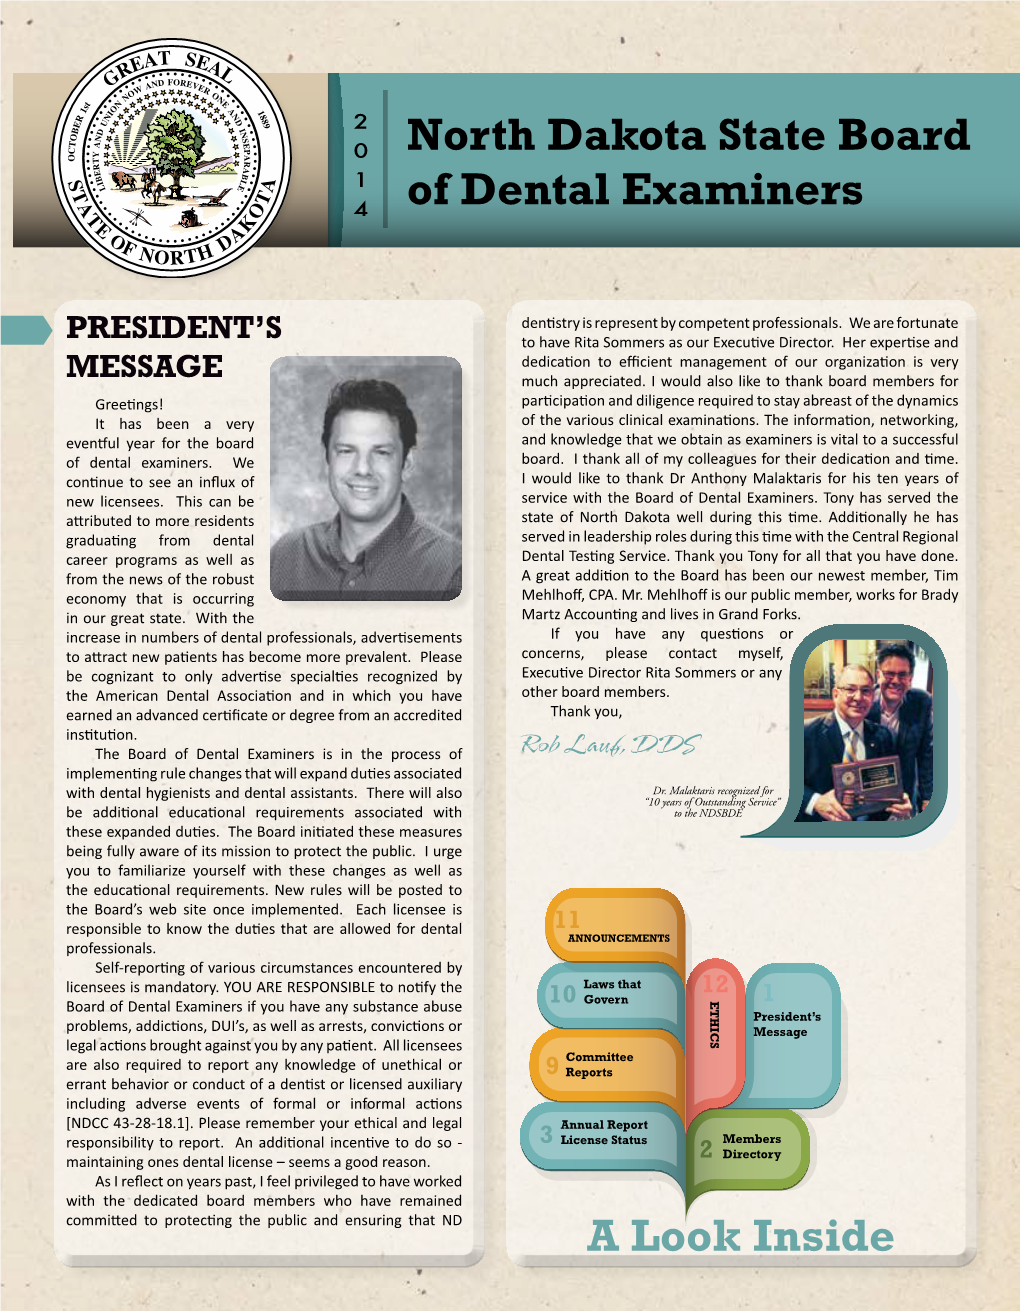 A Look Inside North Dakota State Board of Dental Examiners